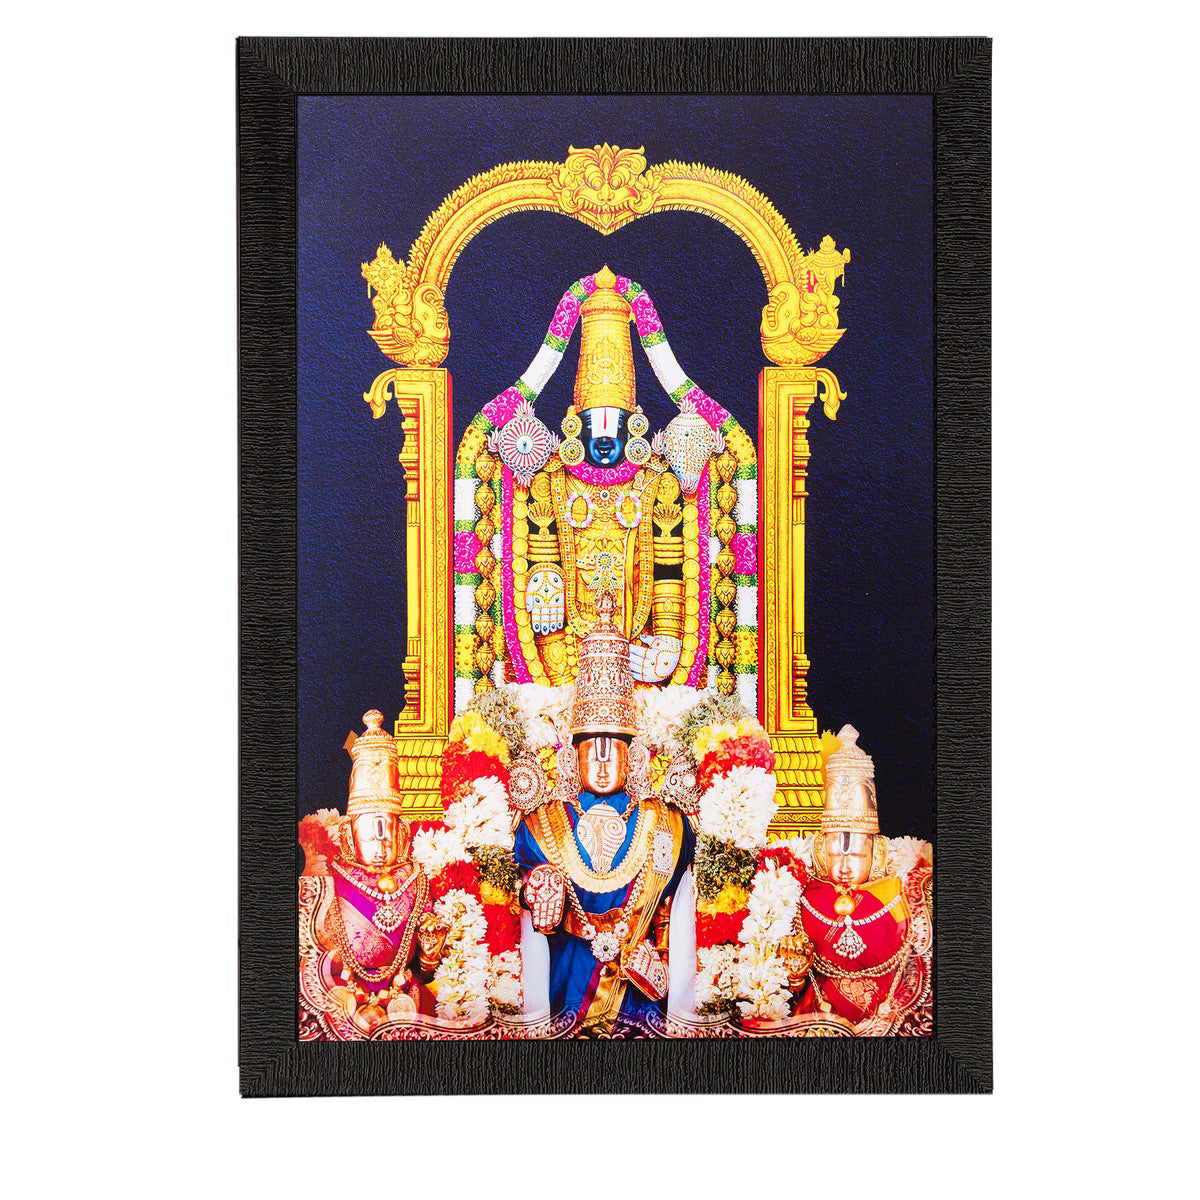 Hindu God Tirupati Balaji Painting Digital Printed Religious Wall Art